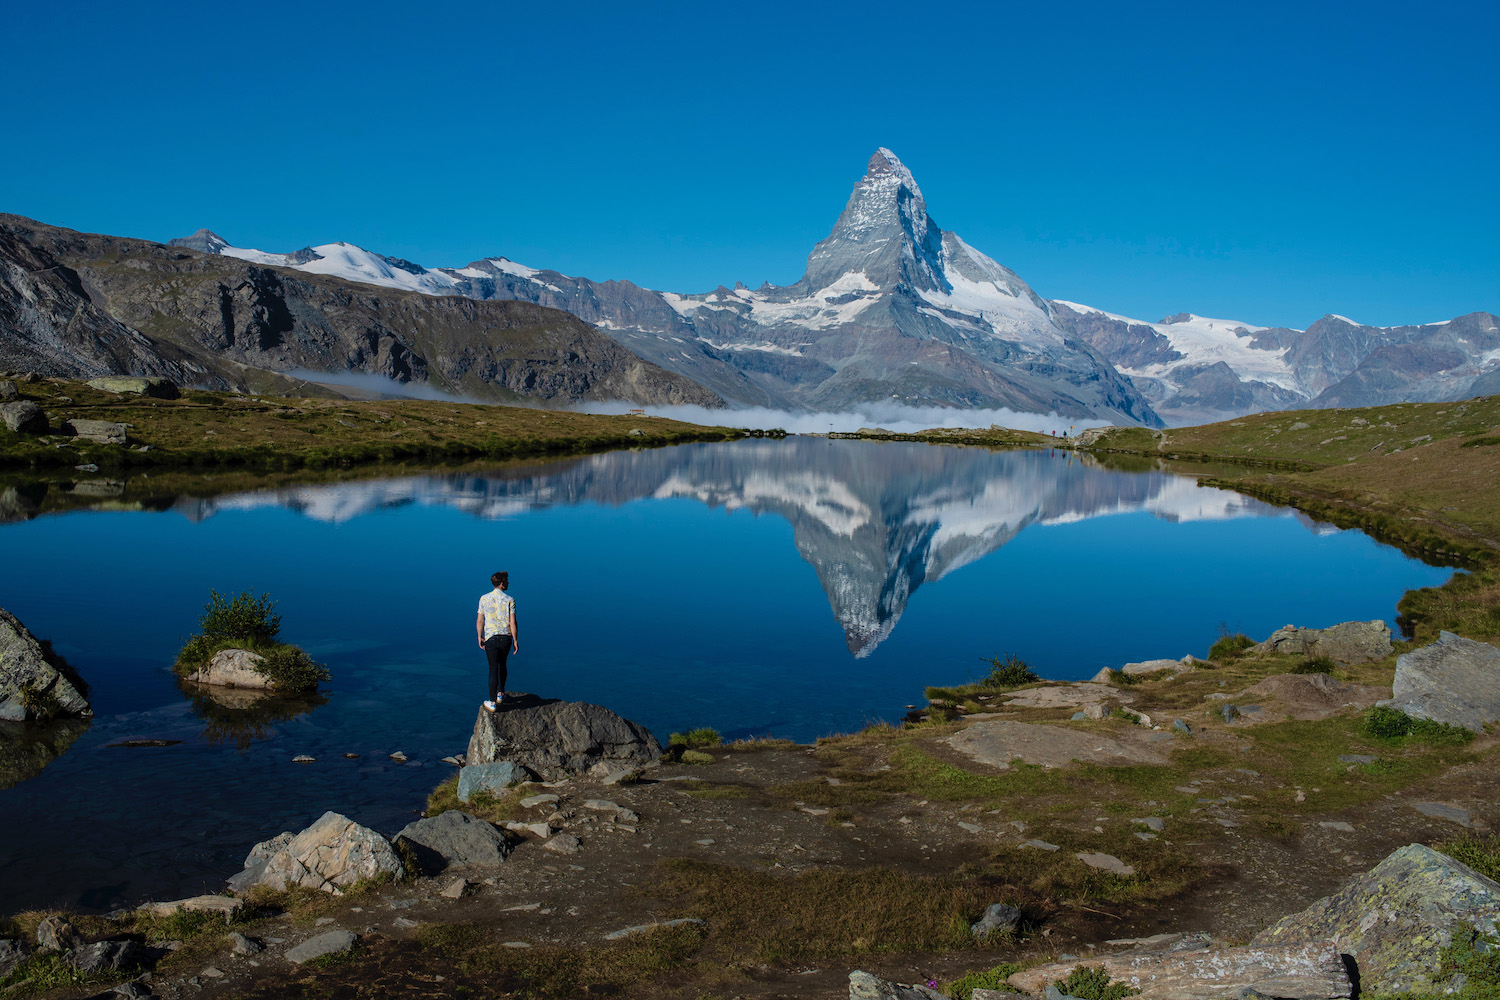 How to See the Matterhorn